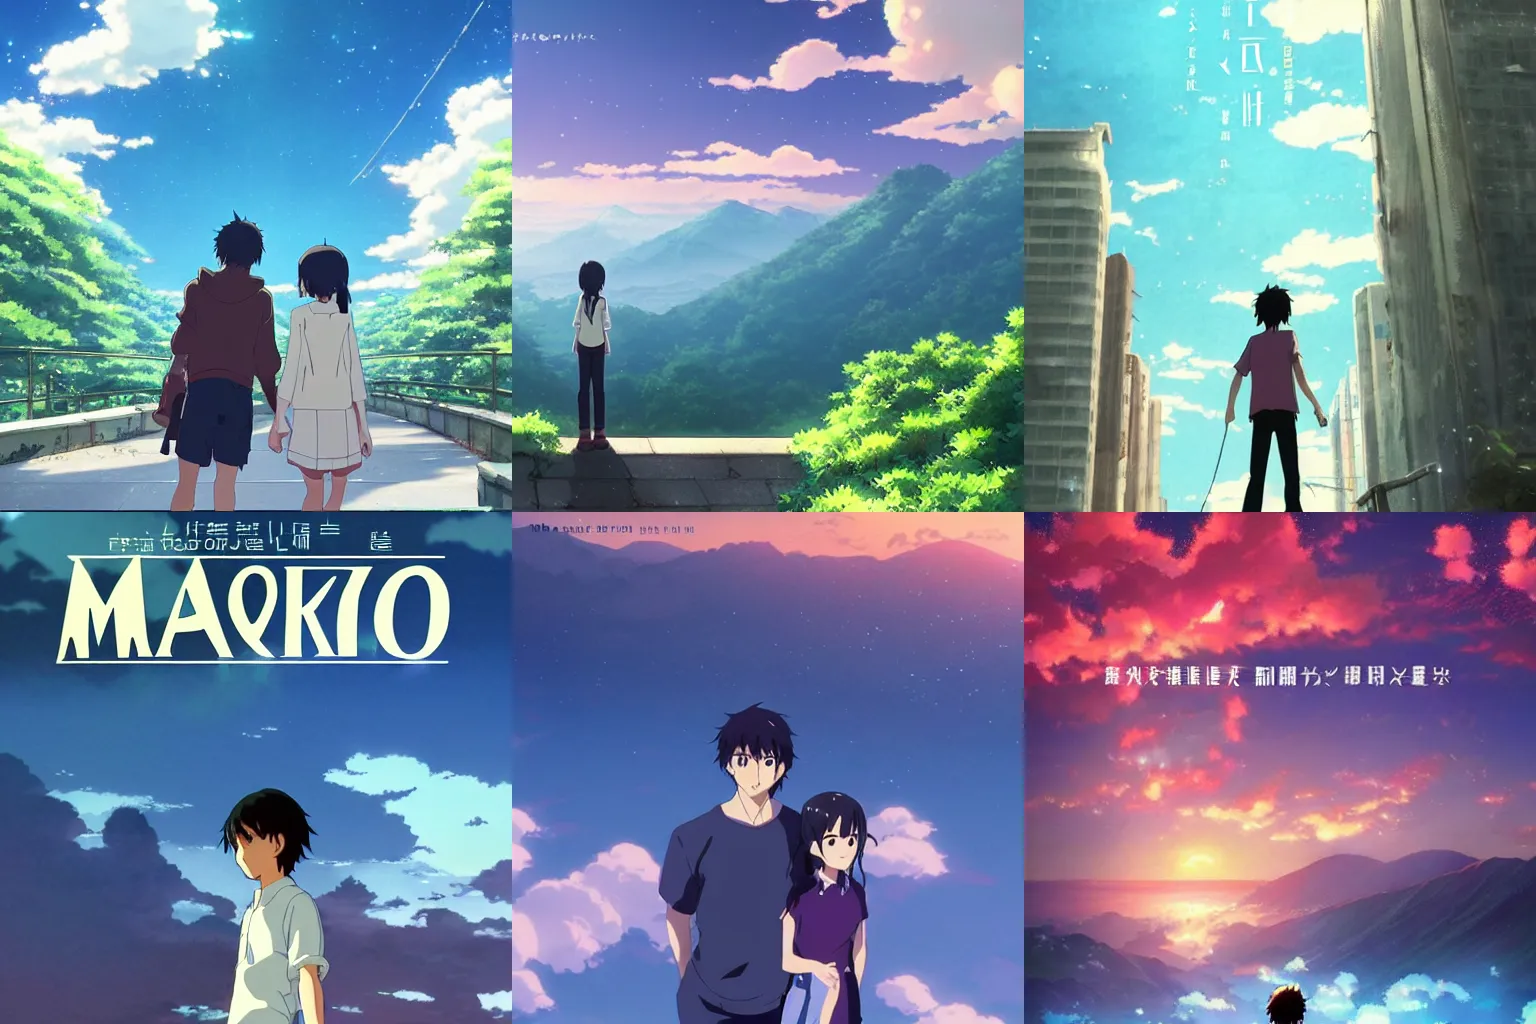 Prompt: movie poster for Makoto Shinkai next movie.